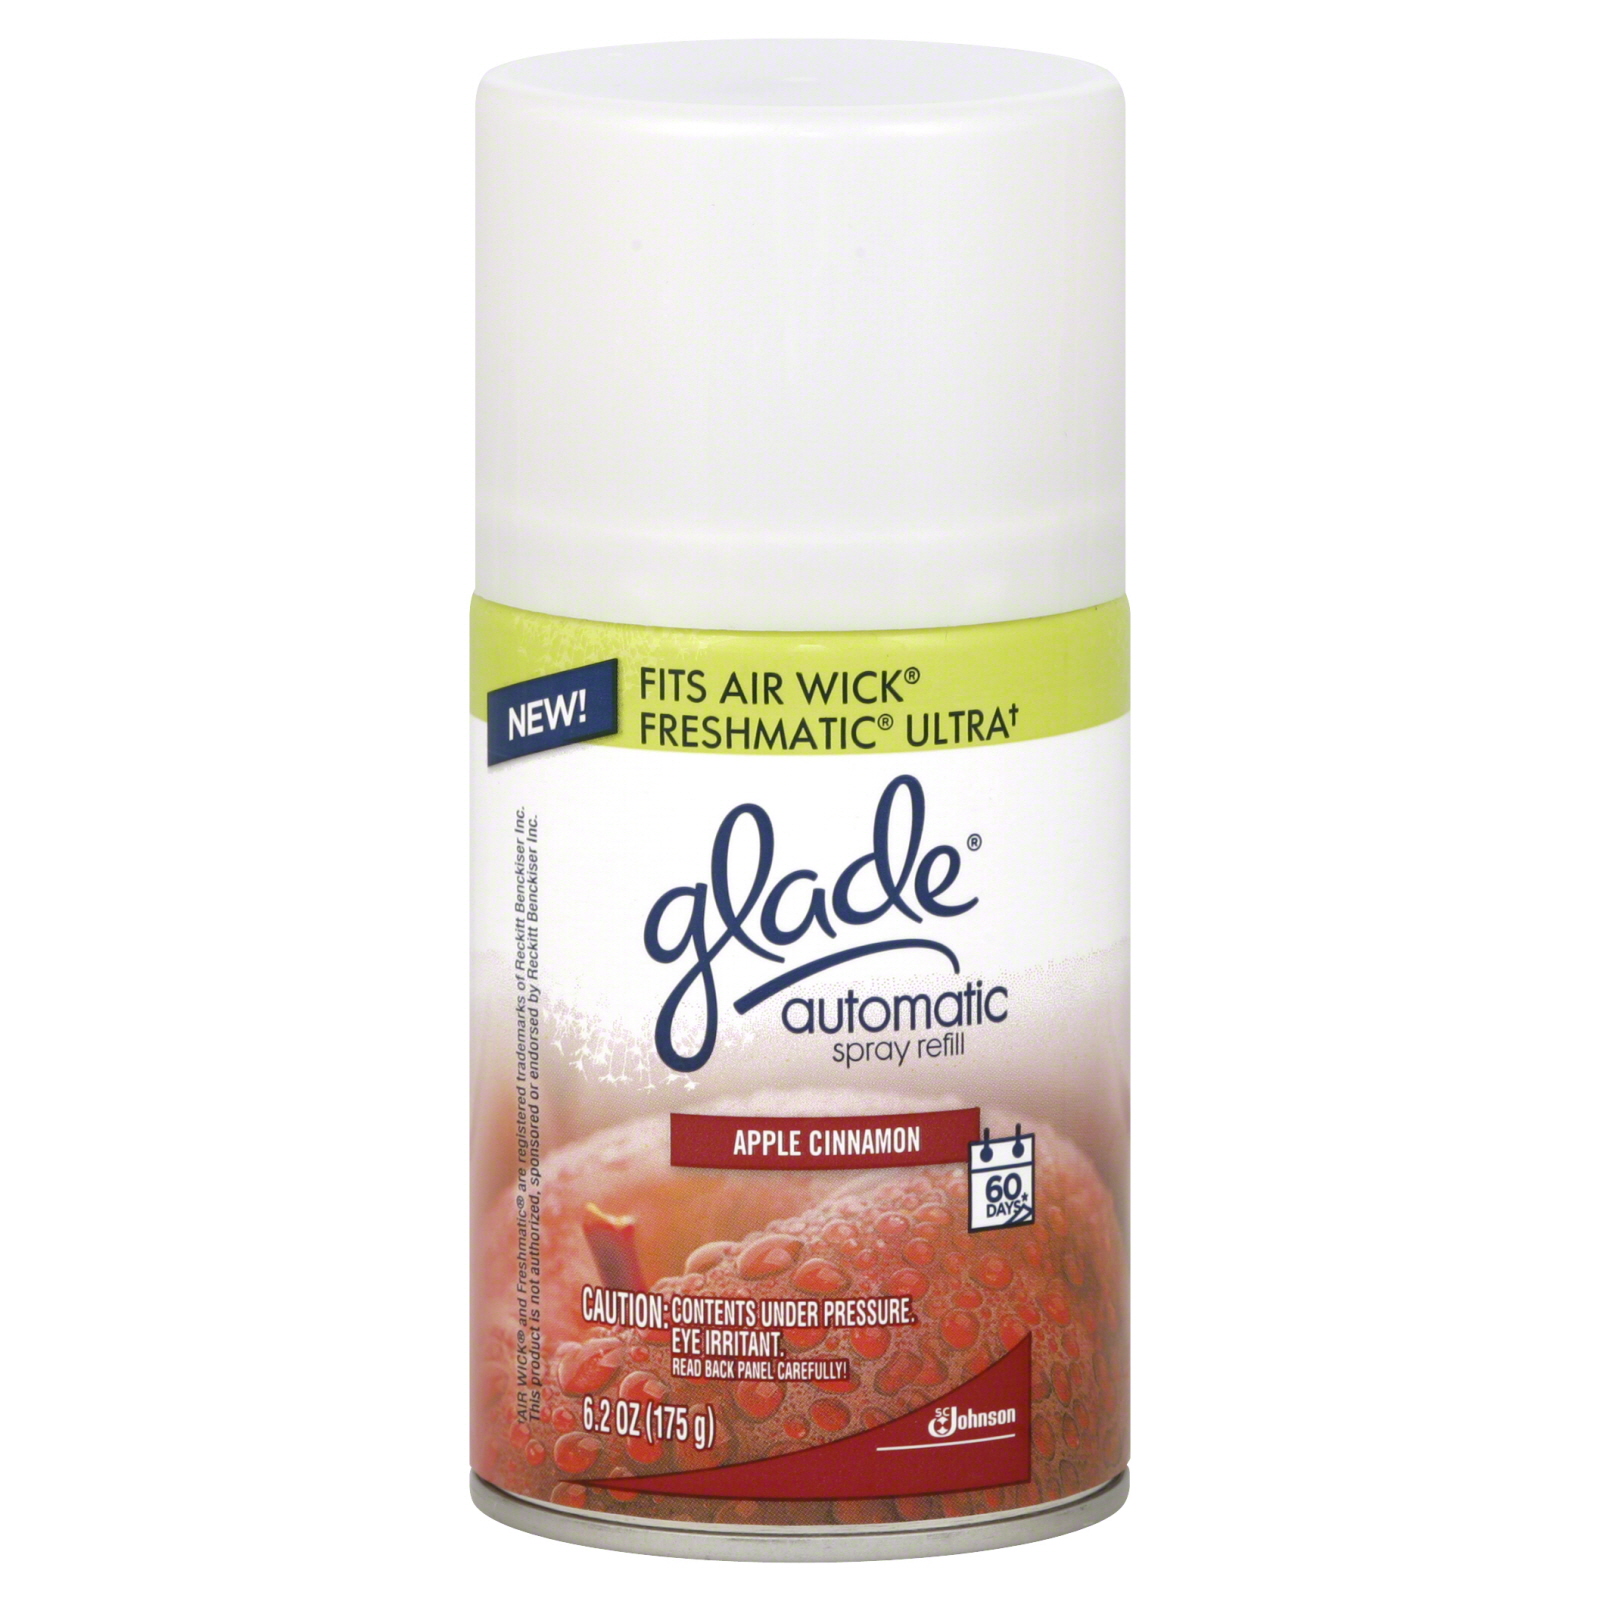 Glade Automatic Spray Refill, Apple Cinnamon, 6.2 oz (175 g)